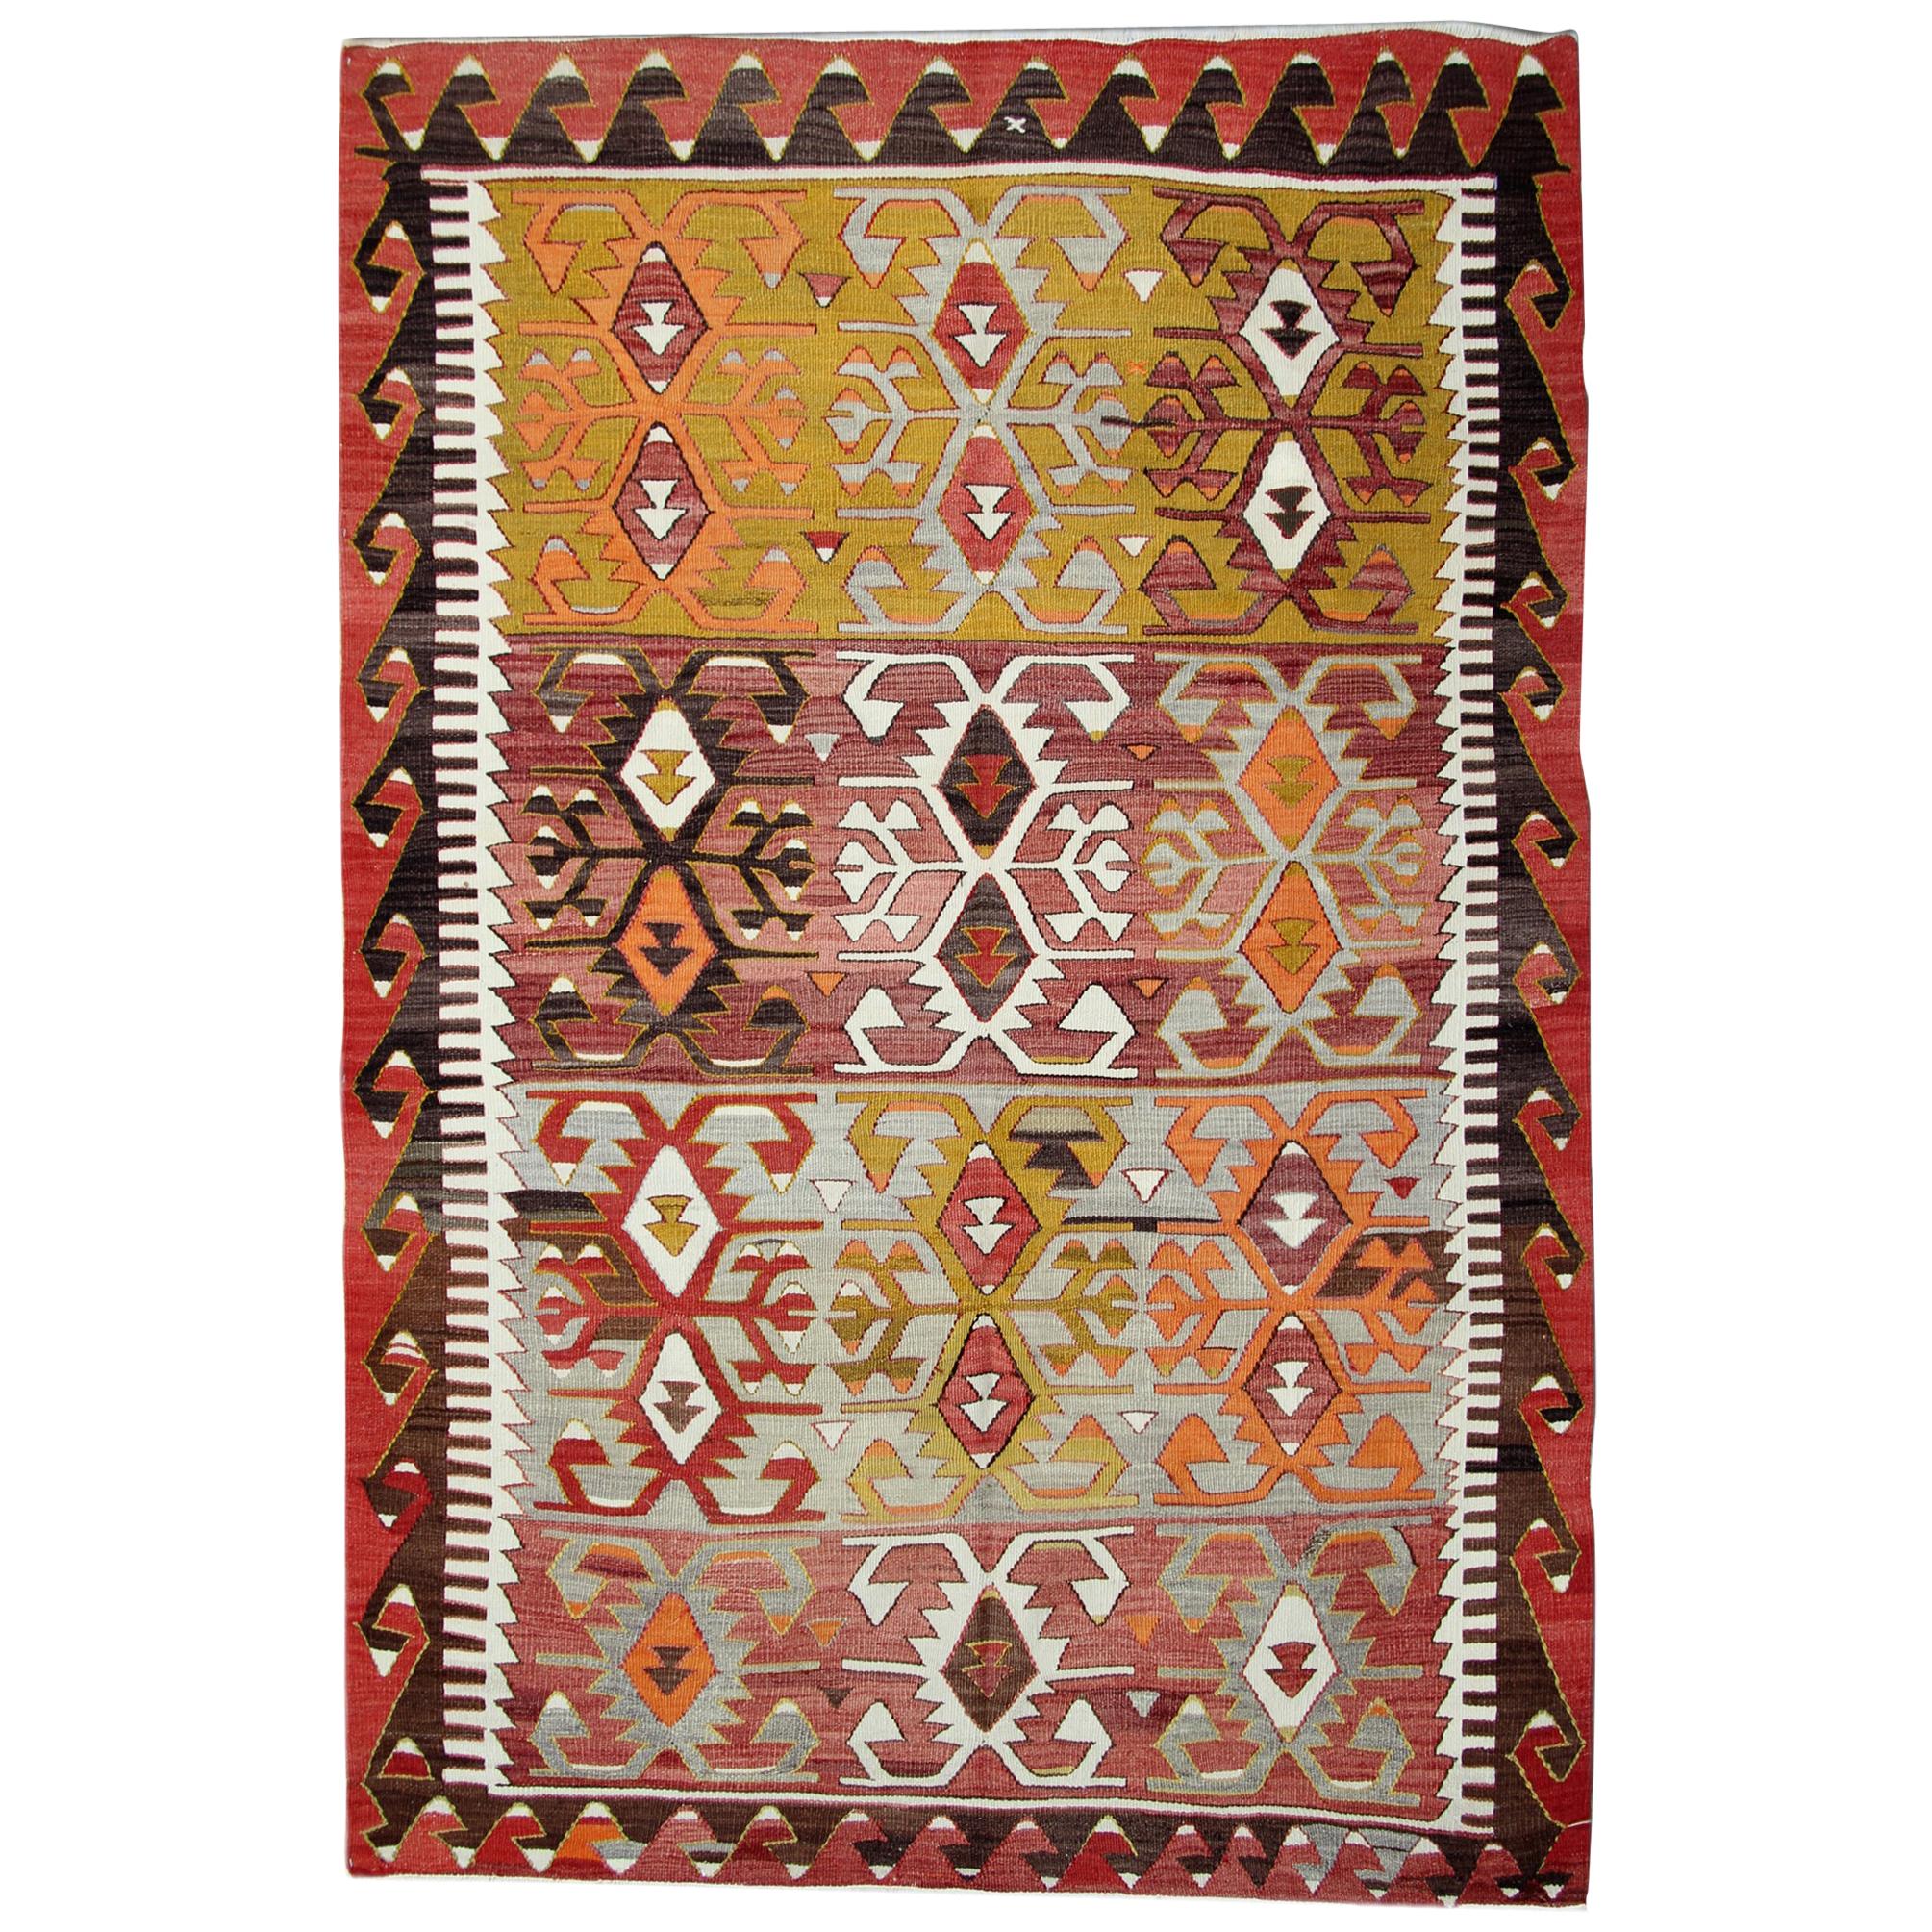 Antique Kilim Rugs, Traditional Oriental Rugs, Turkish Handmade Carpet For Sale